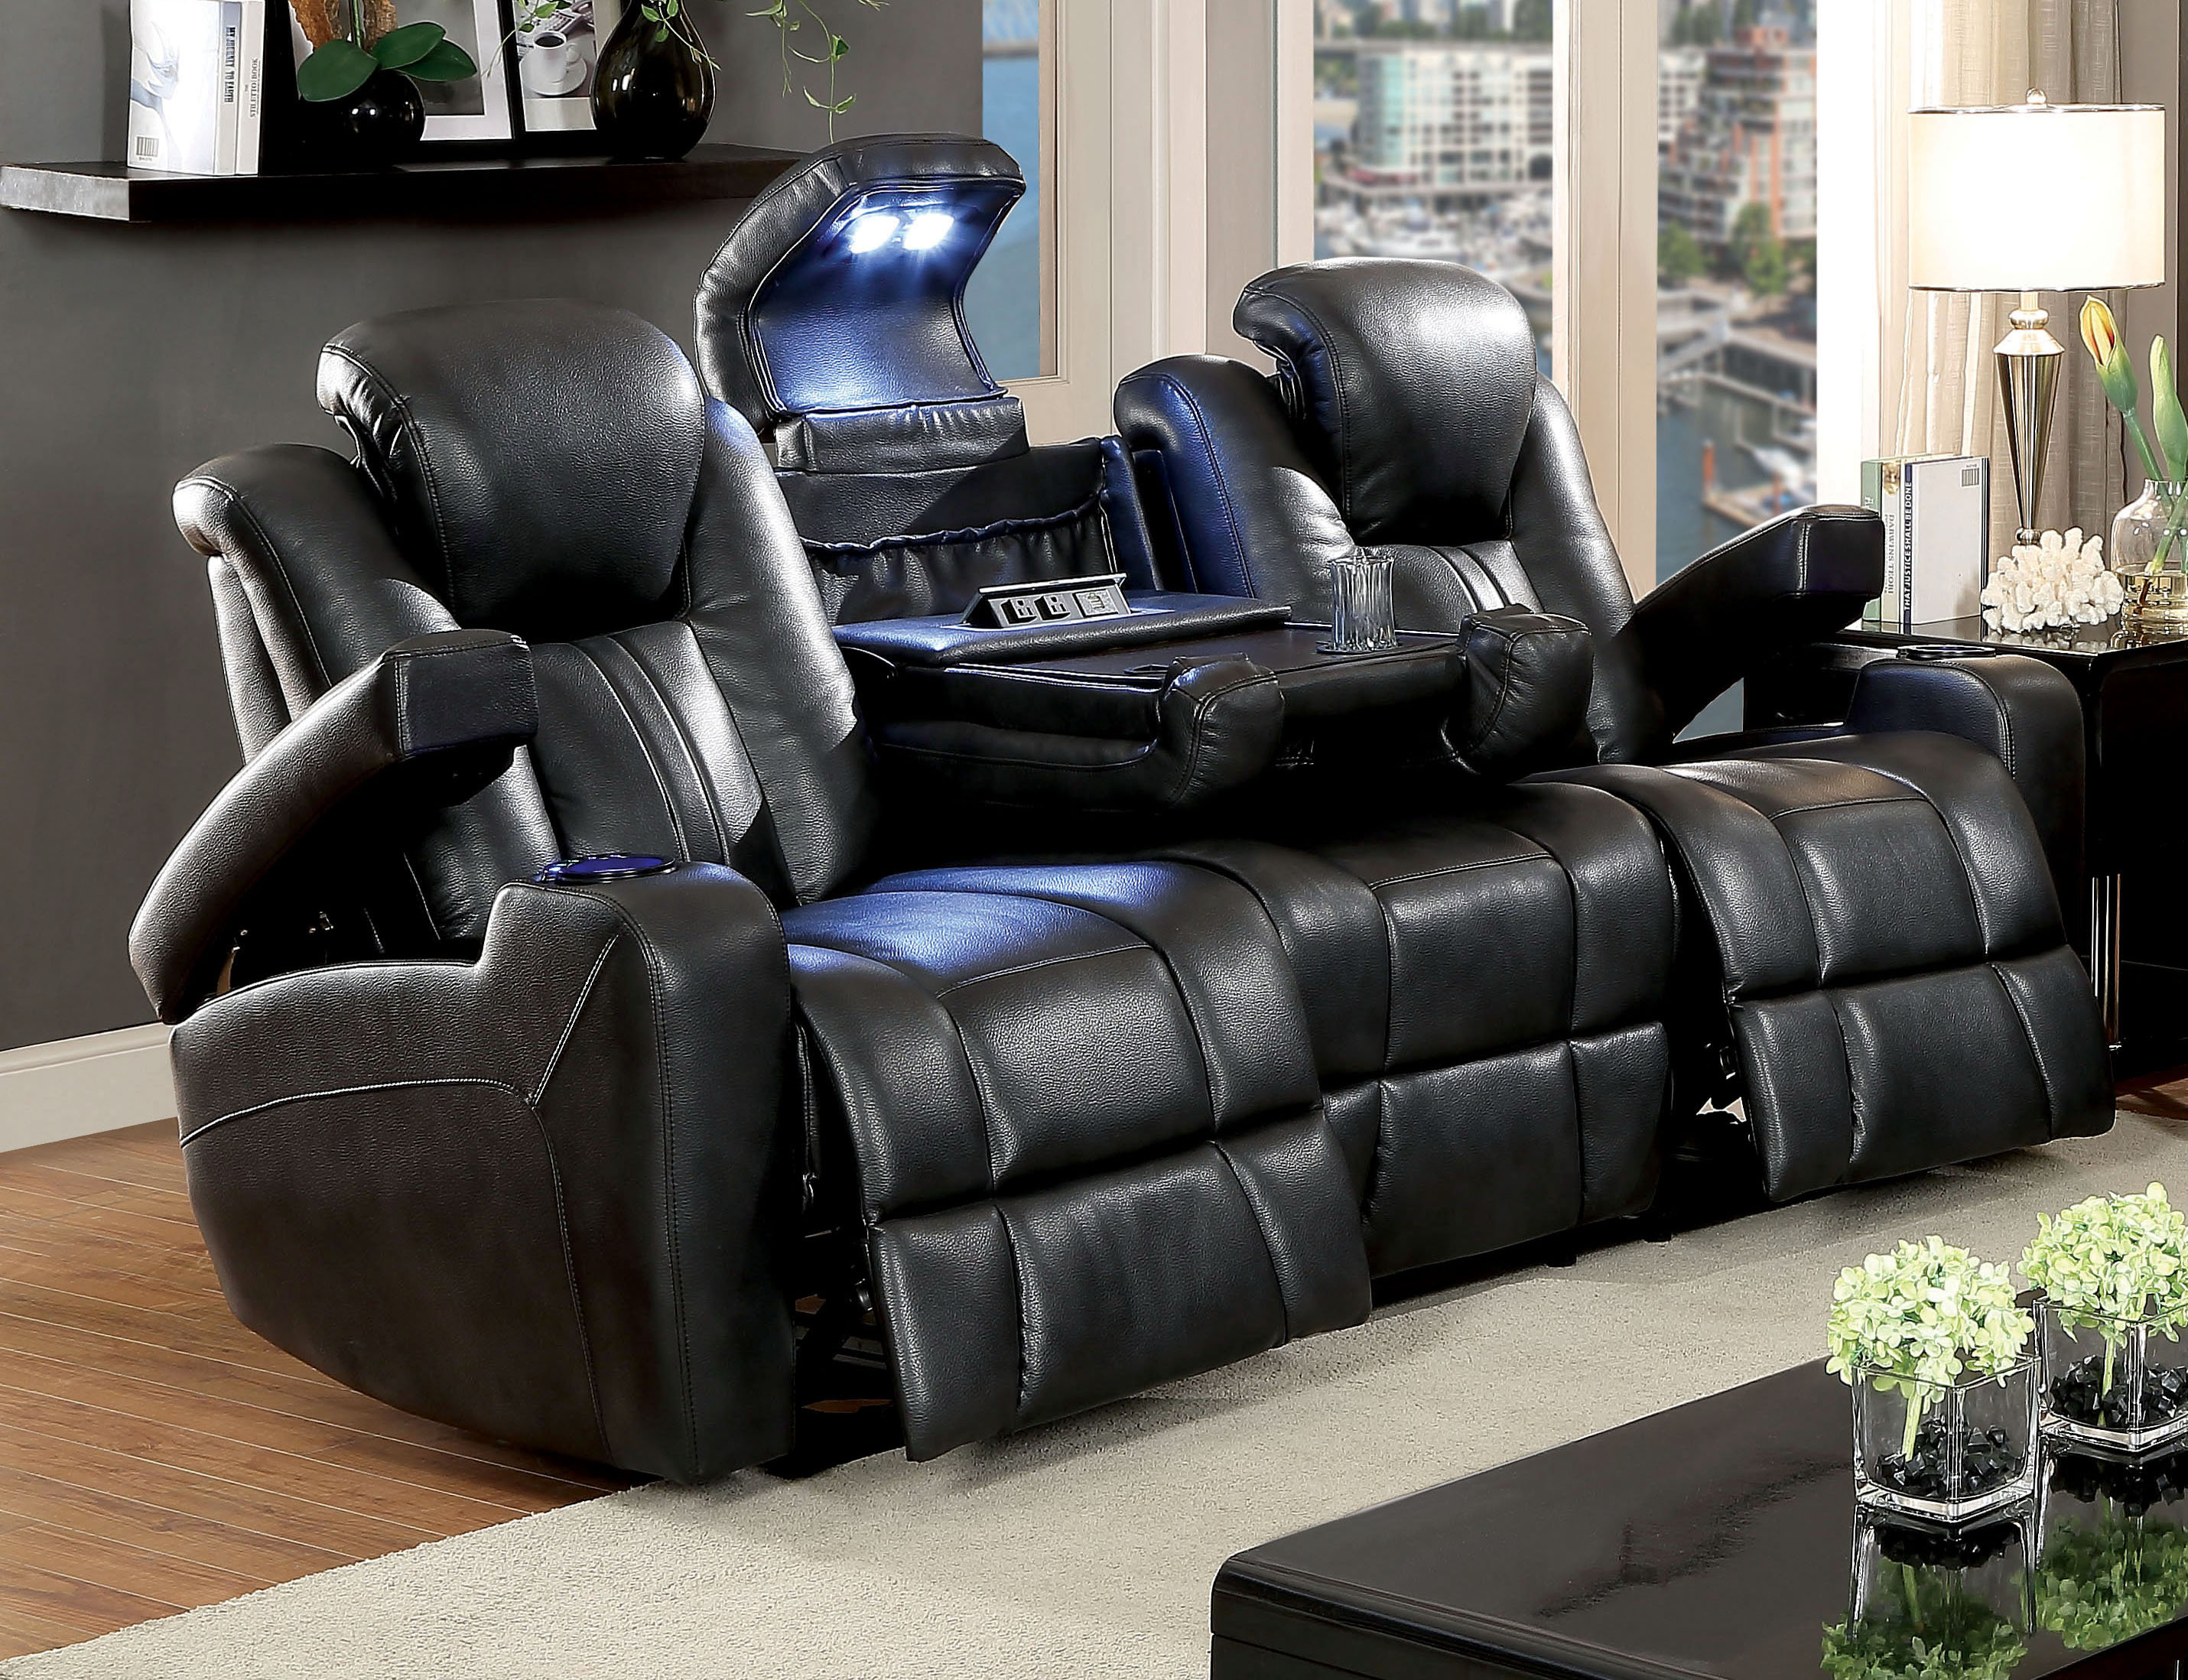 Orren Ellis Bettina Faux Leather Reclining Configurable Living Room Set Reviews Wayfair